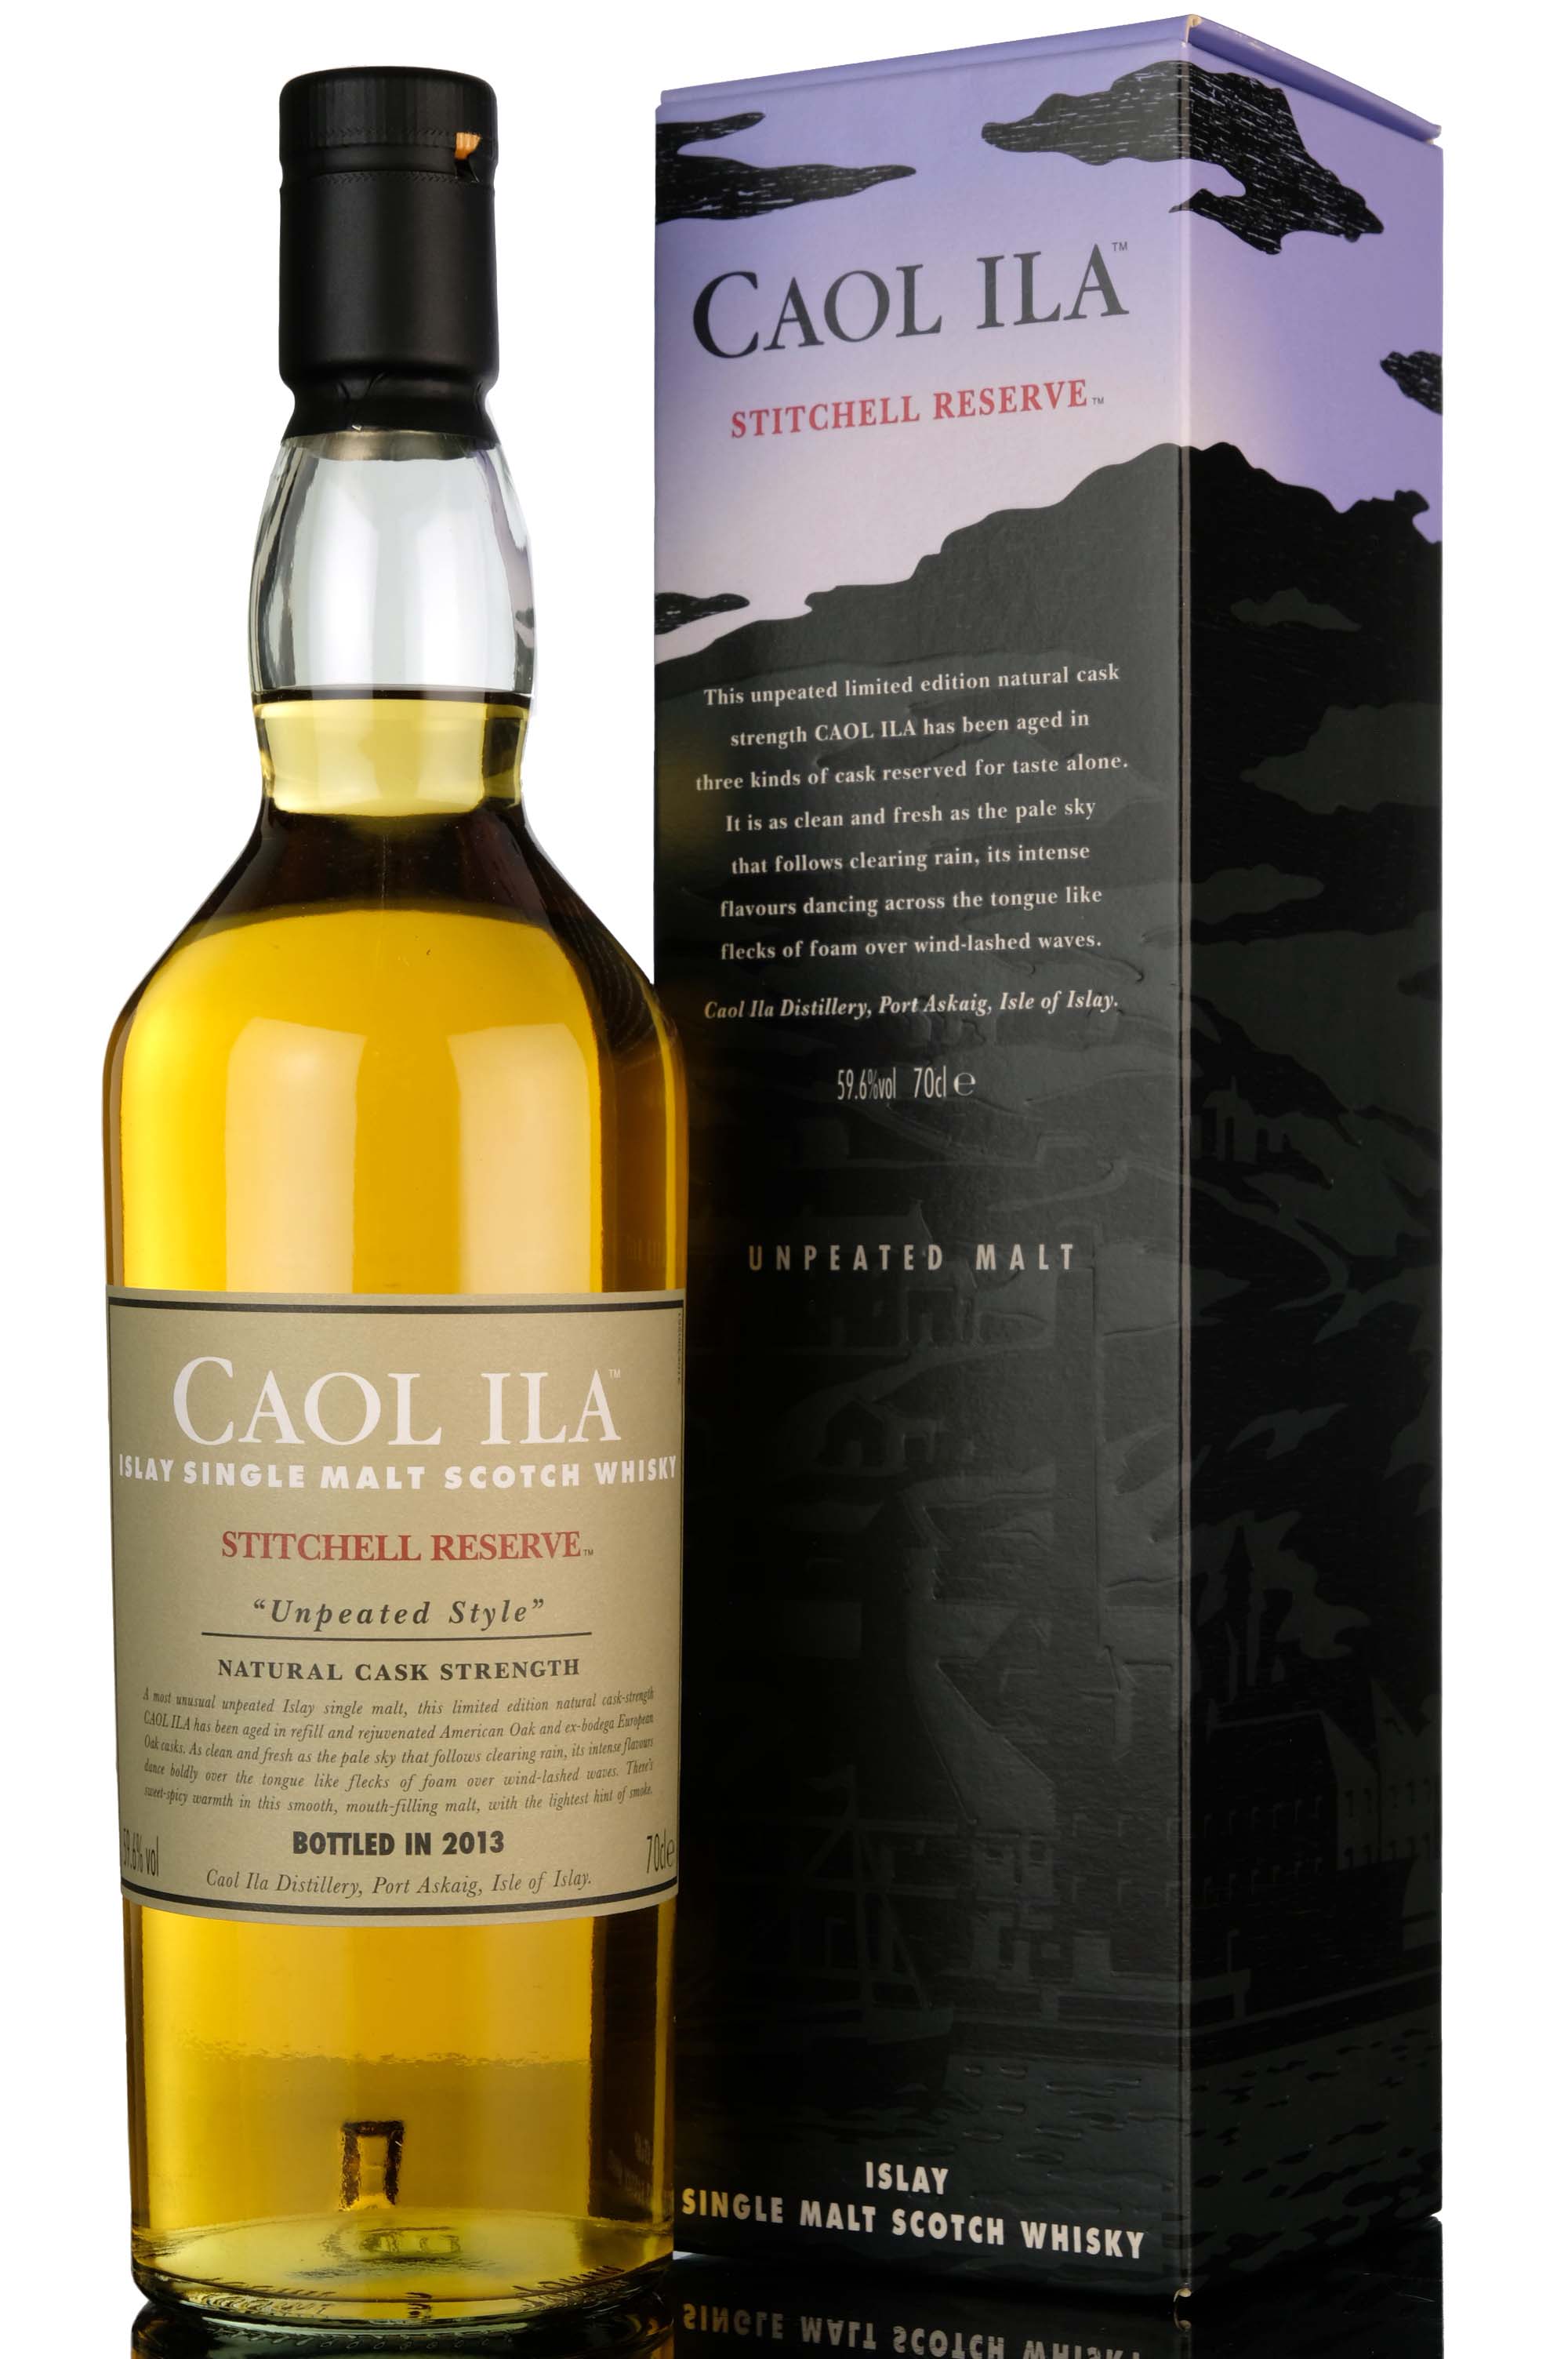 Caol Ila Stitchell Reserve - Cask Strength - 2013 Release